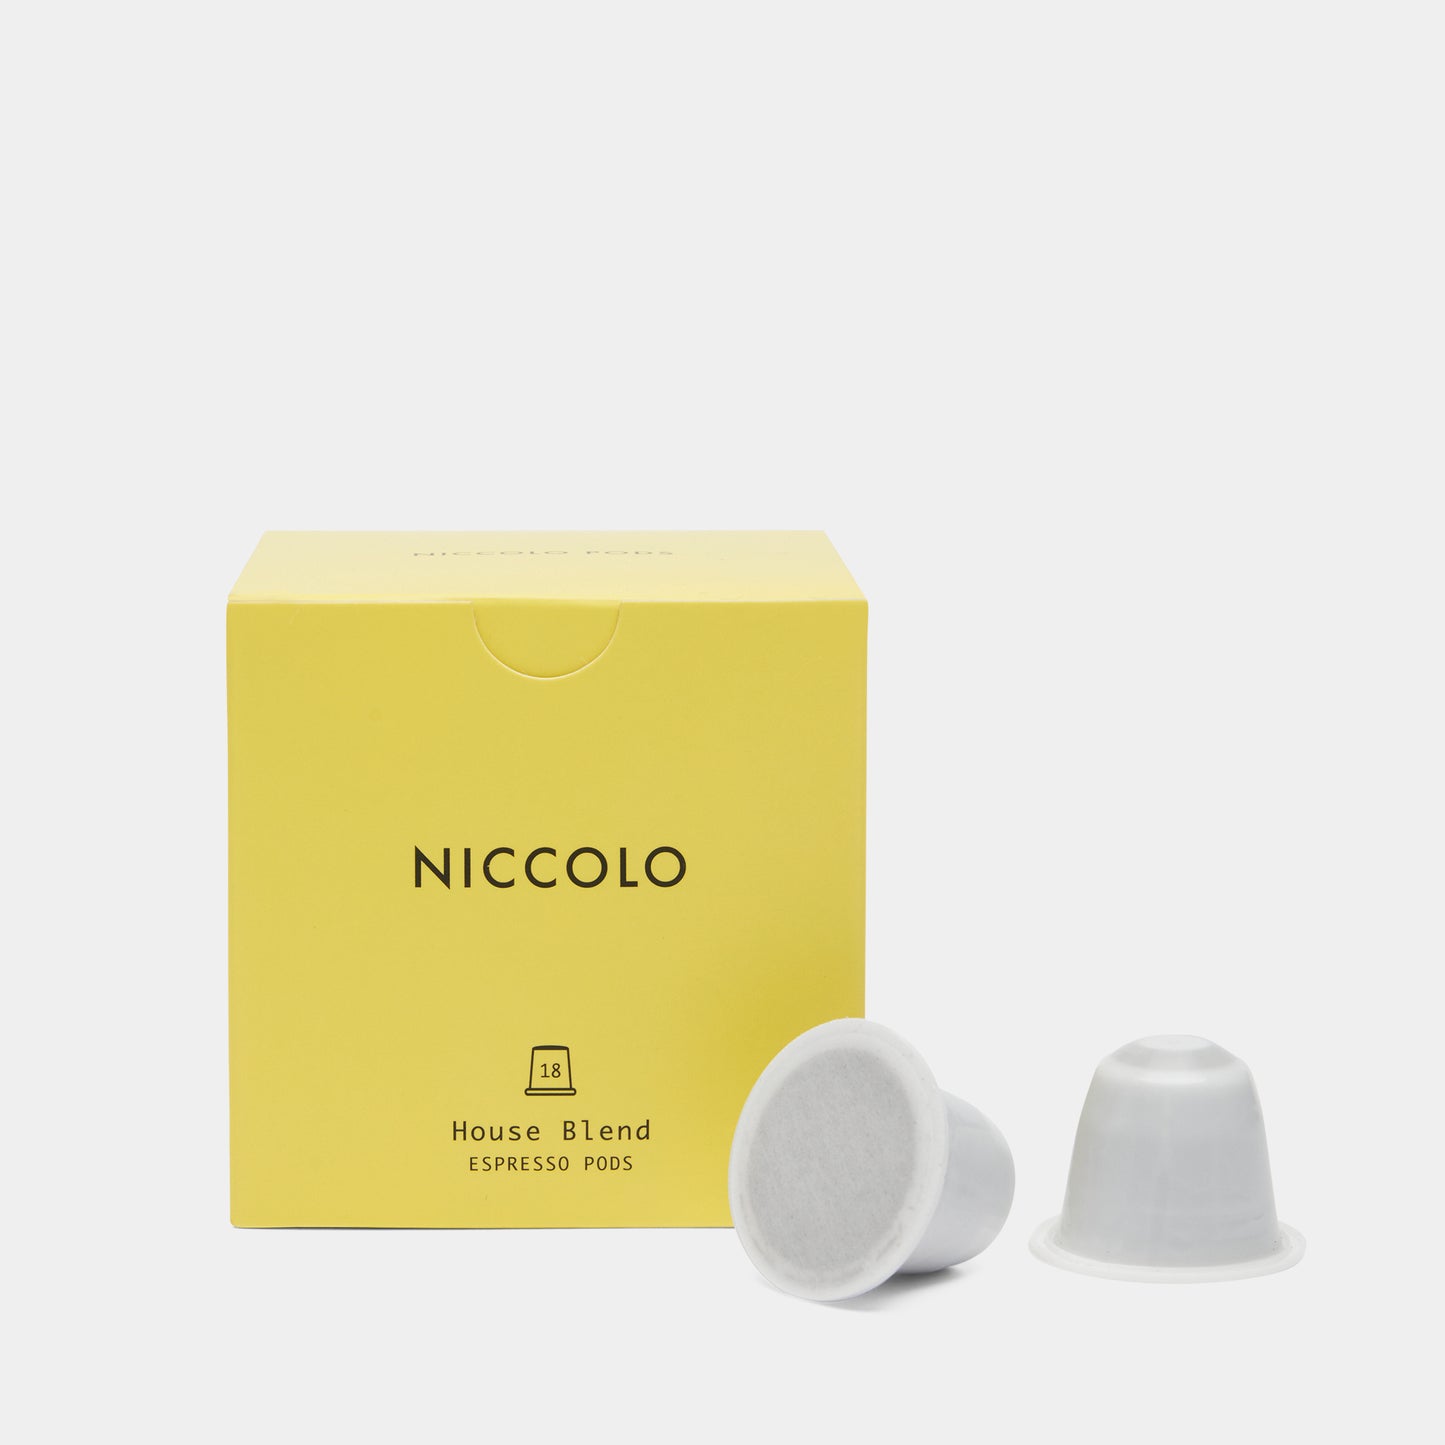 Niccolo House Blend Espresso Pods 18 pack